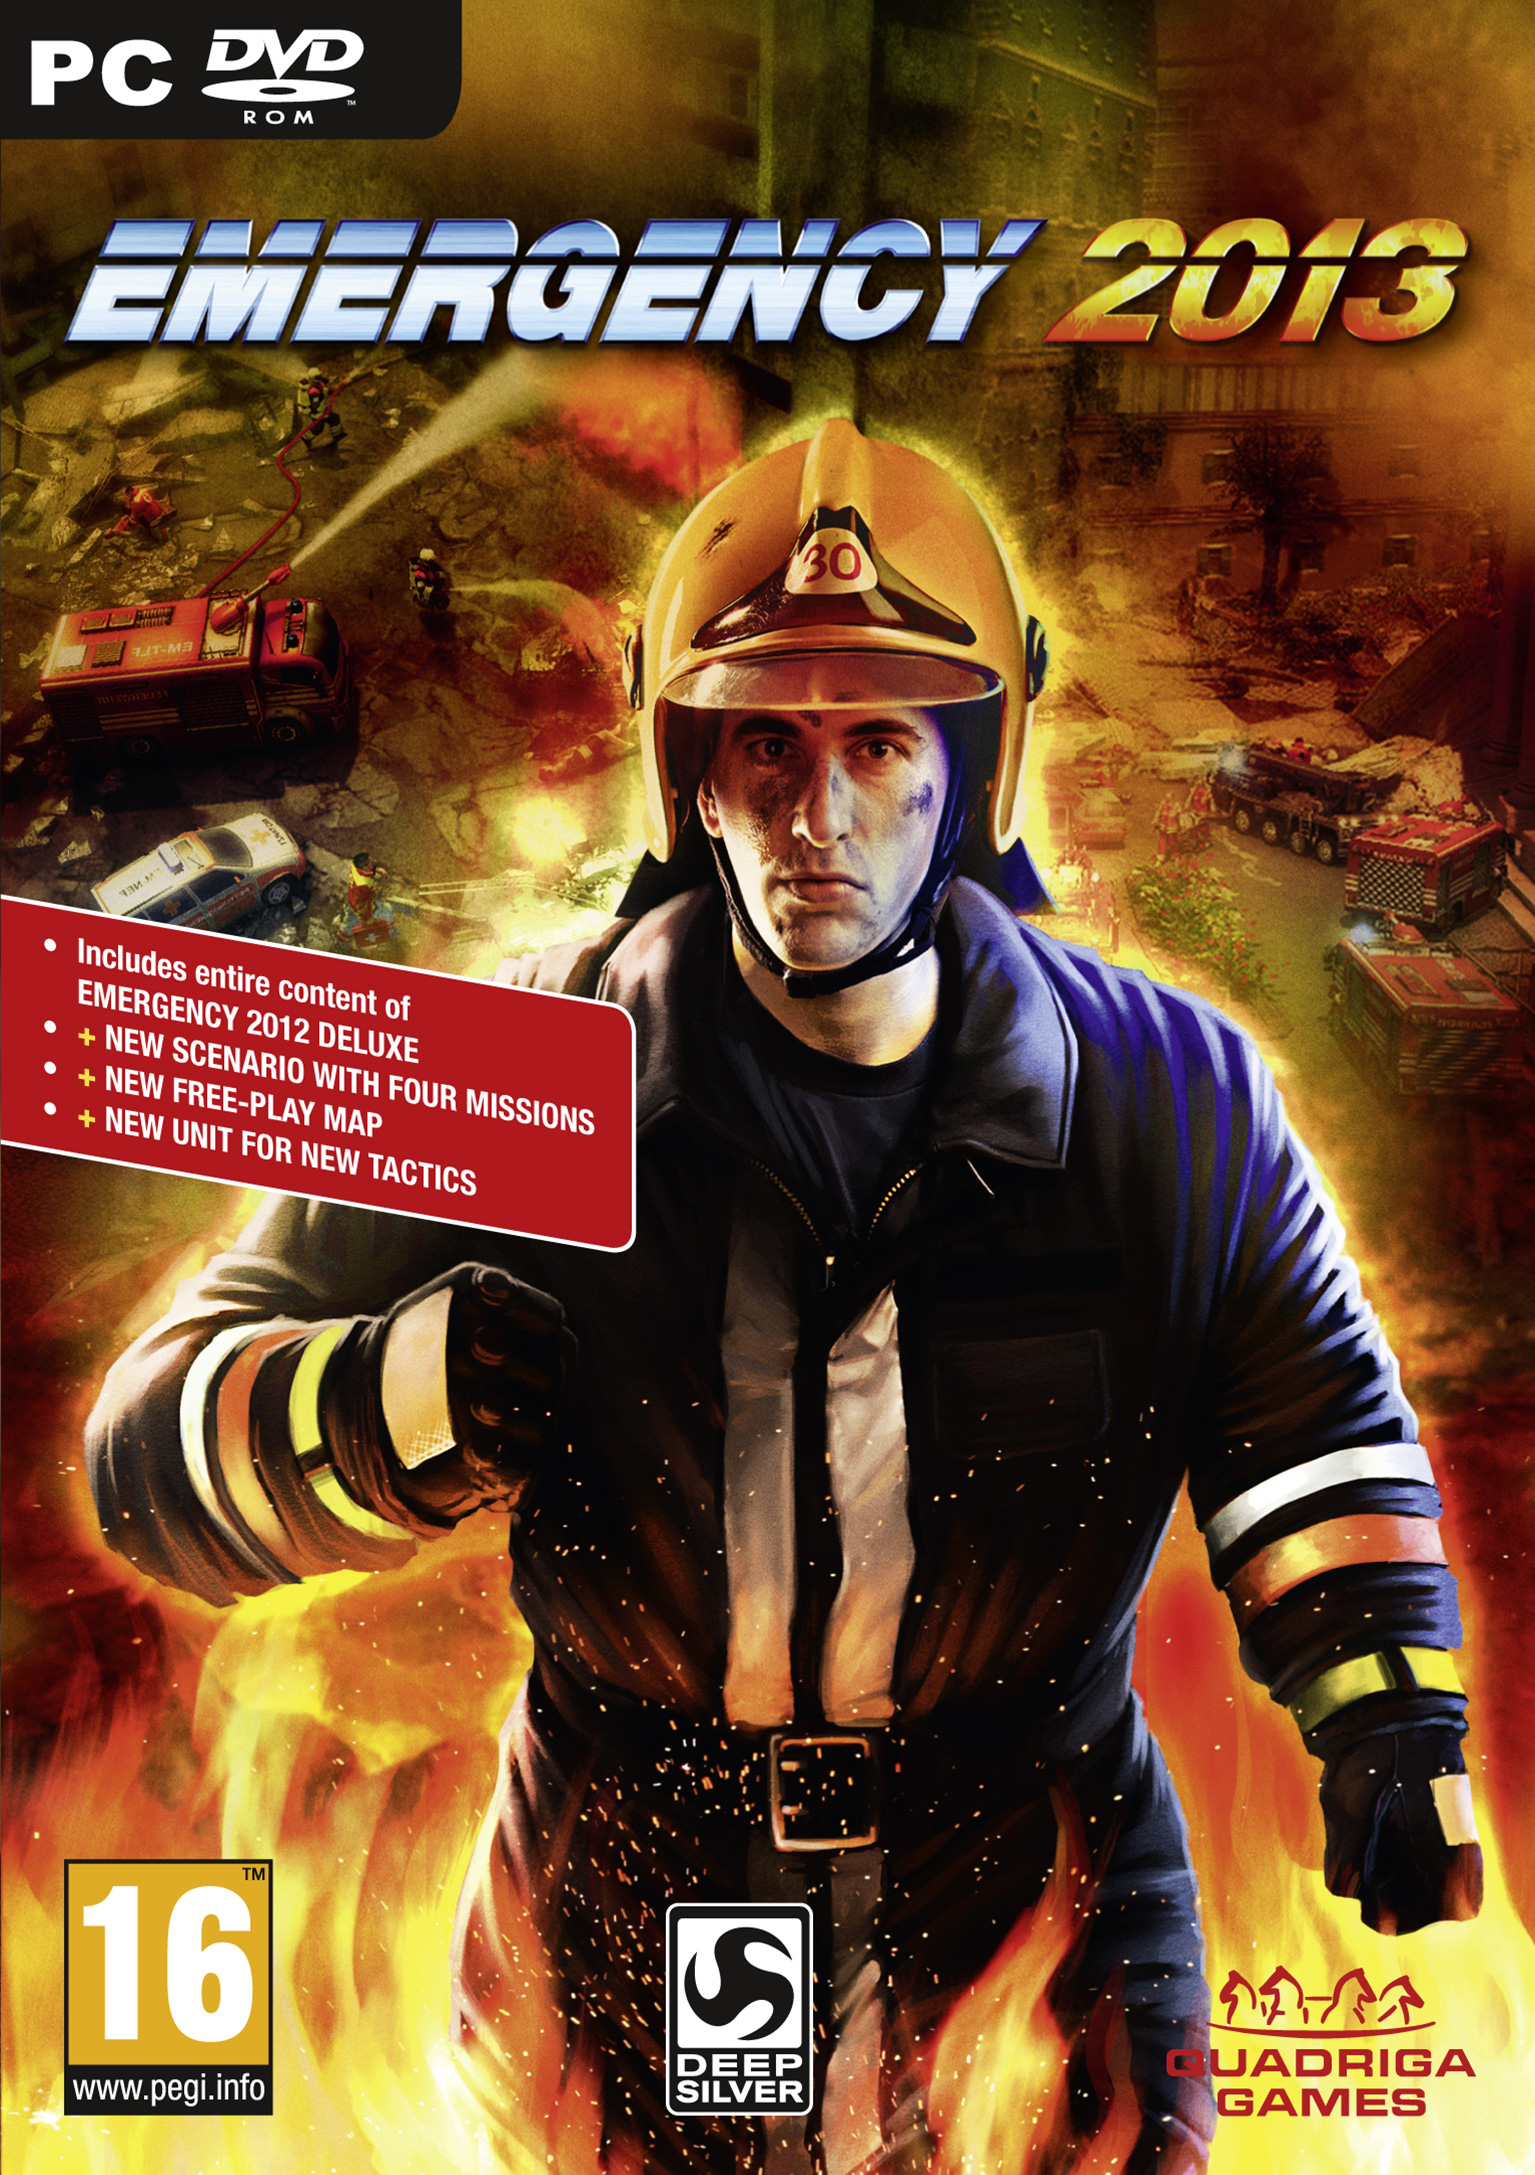 Emergency 2013 - pedn DVD obal